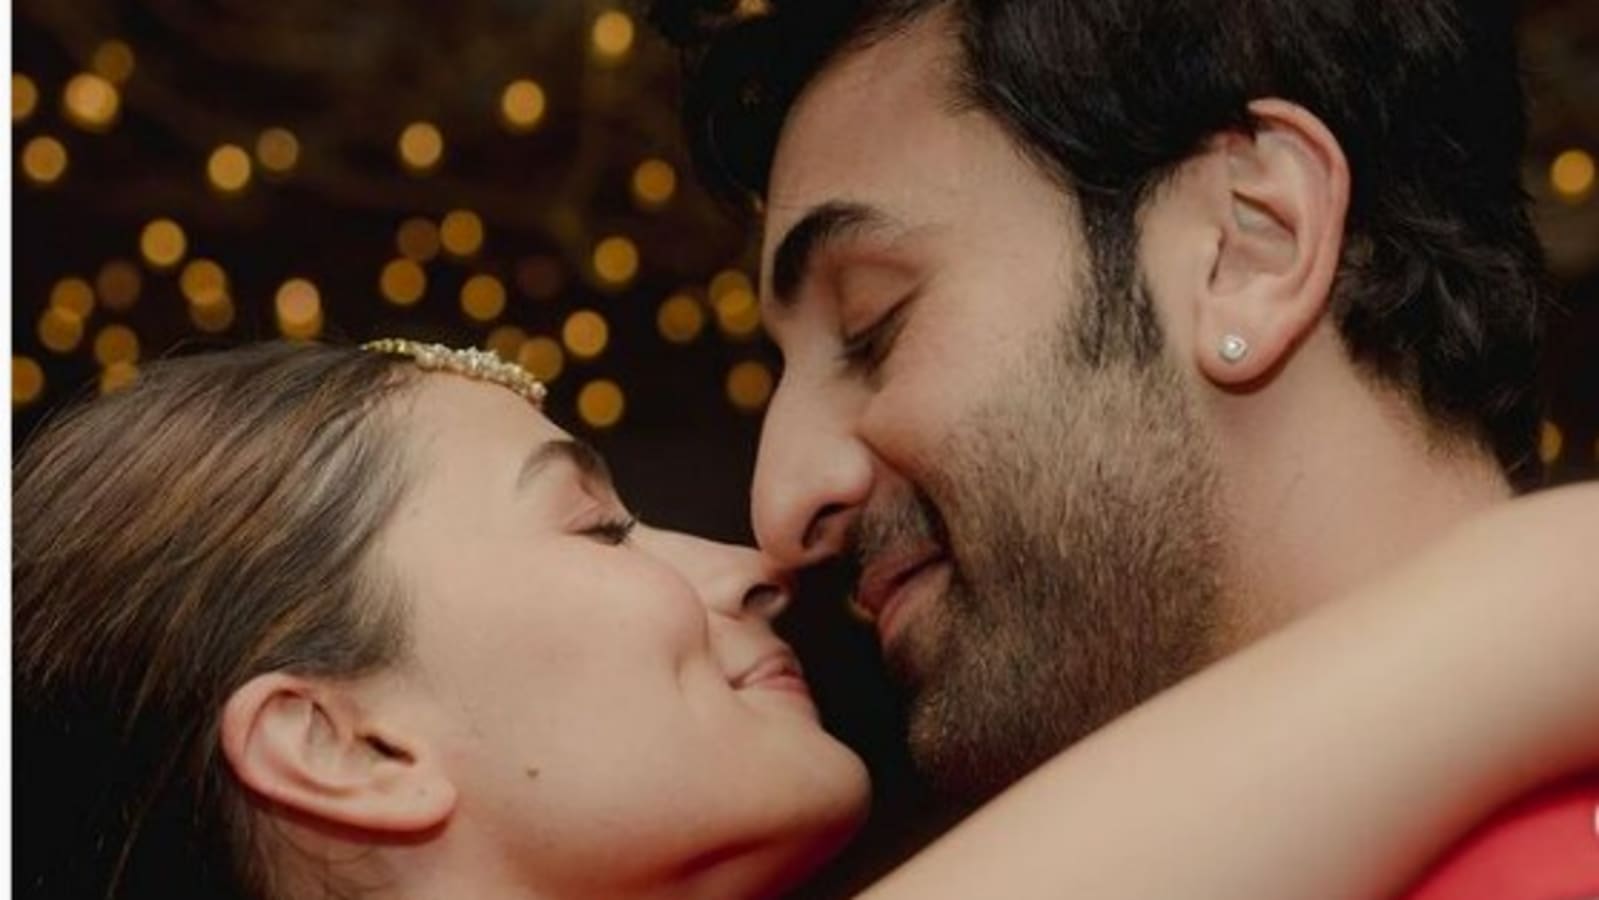 Alia Bhatt celebrates one month of marriage with Ranbir Kapoor, posts new romantic pics from wedding functions